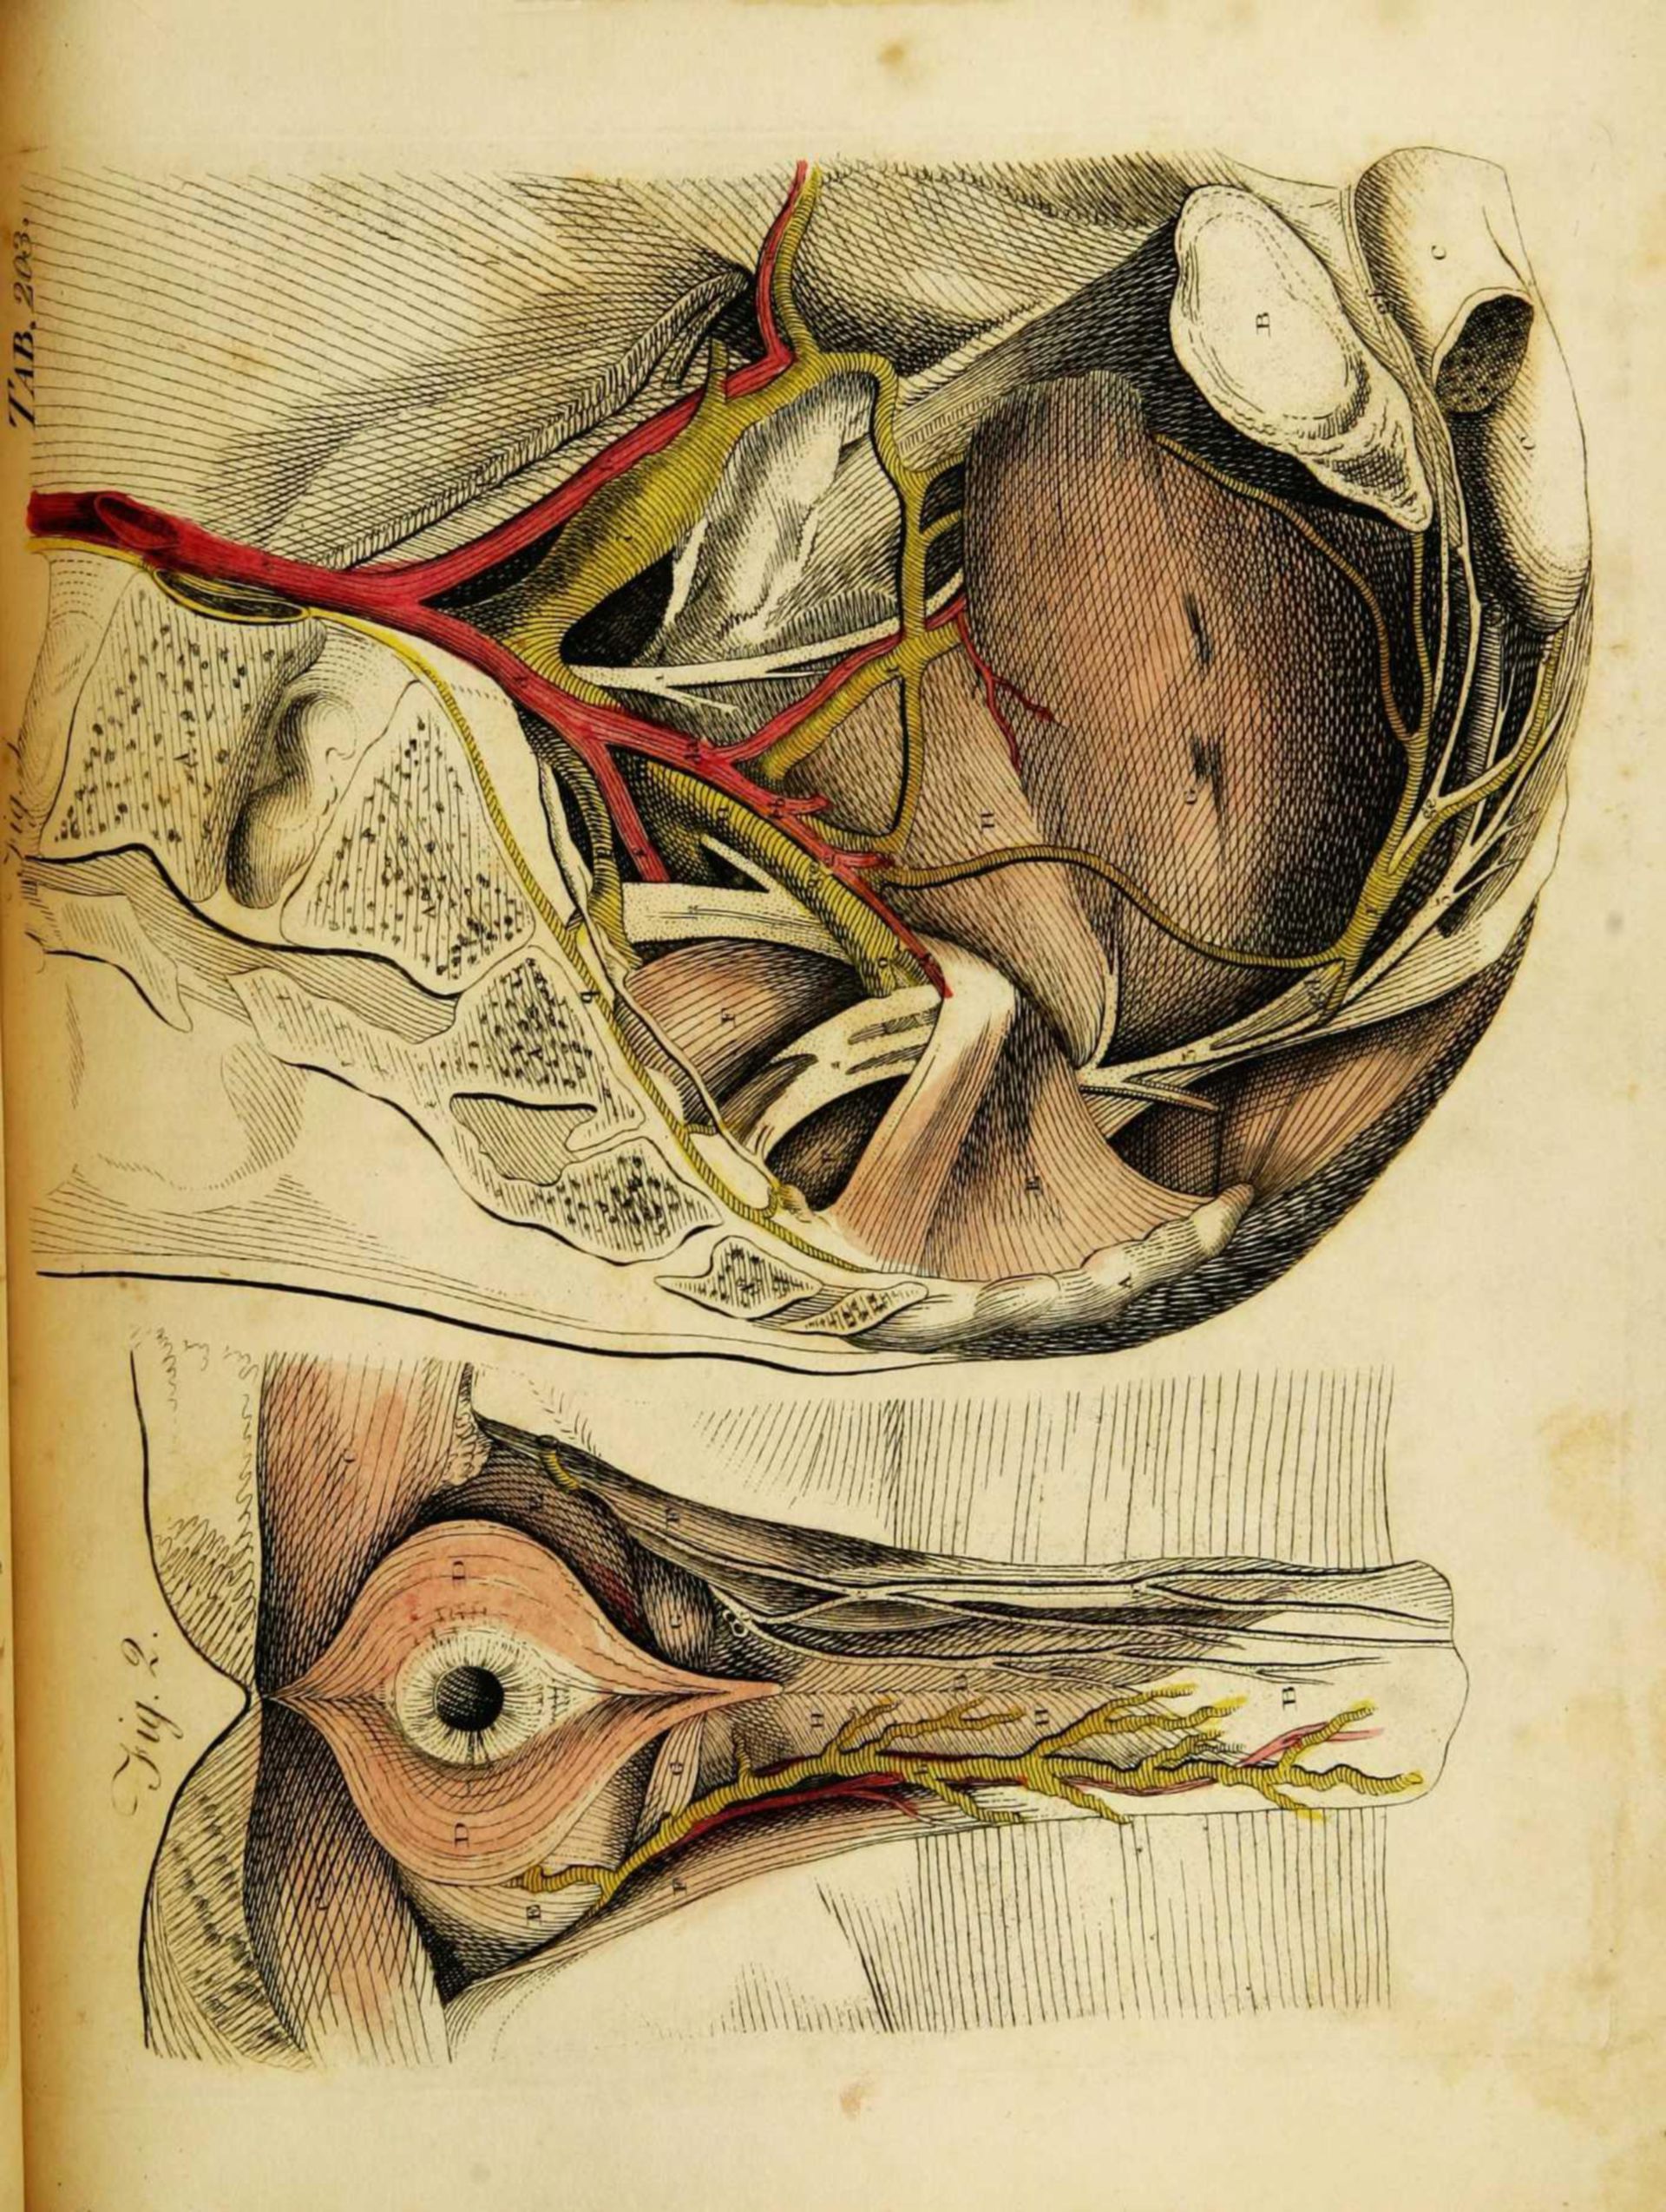 Anatomy of the pelvic base with supply